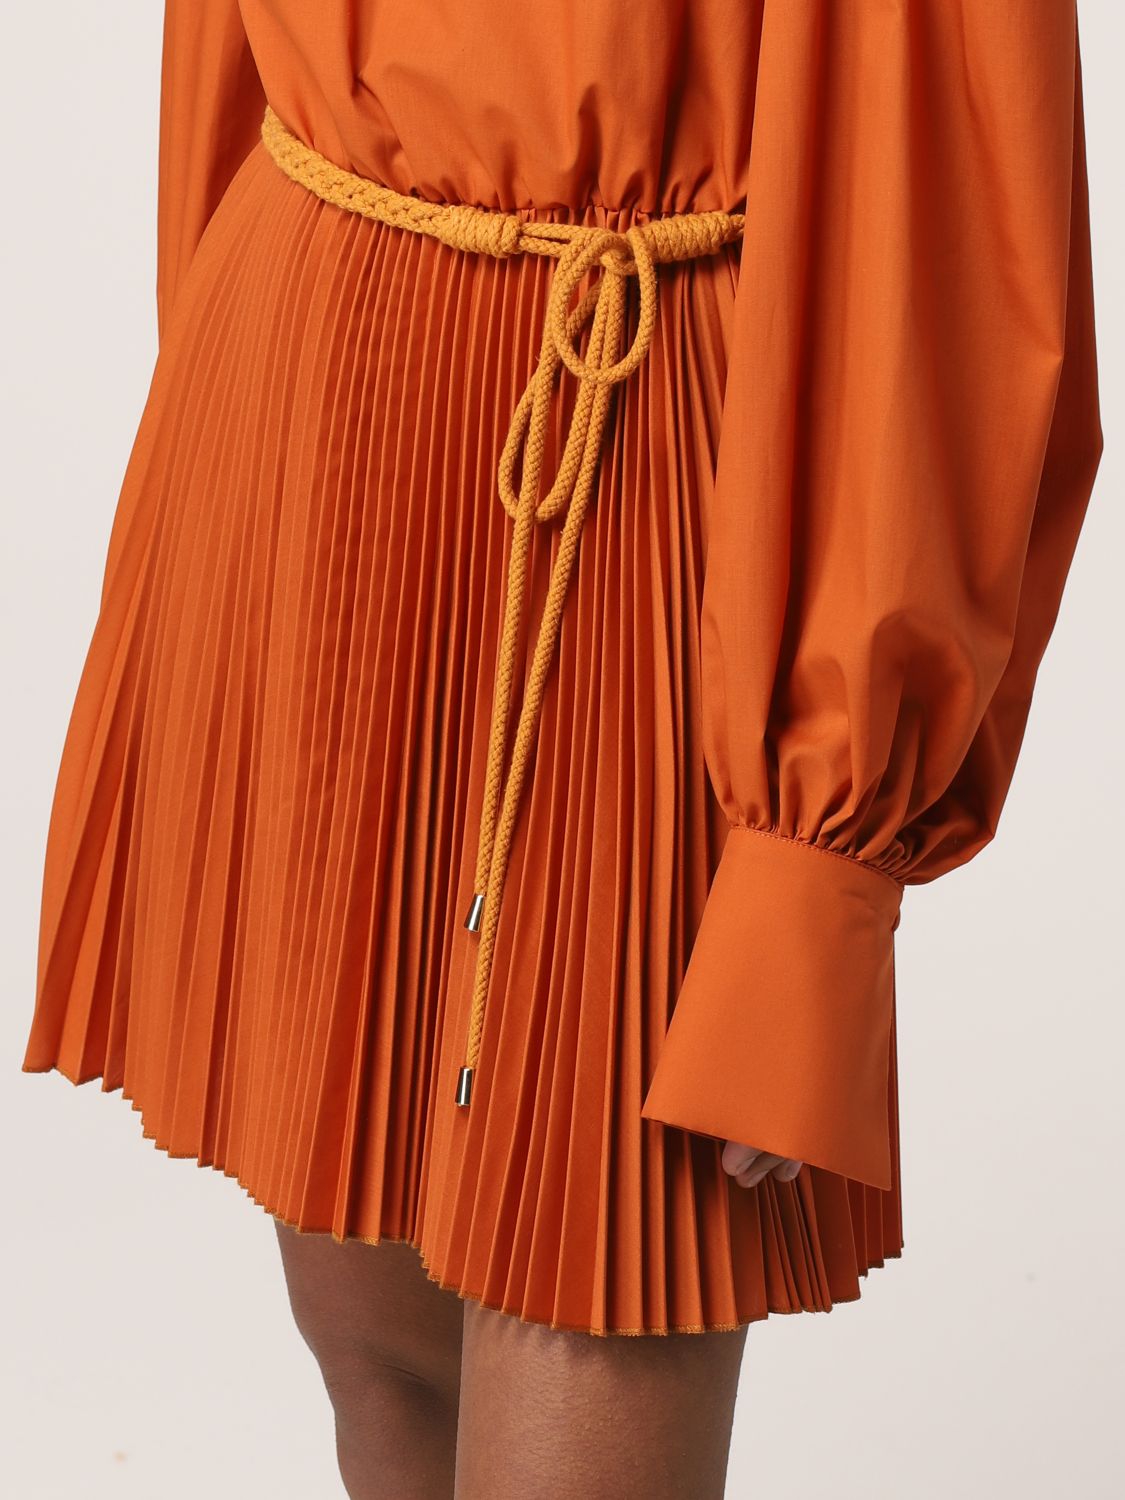 Kleid Federica Tosi: Kleid damen Federica Tosi orange 3